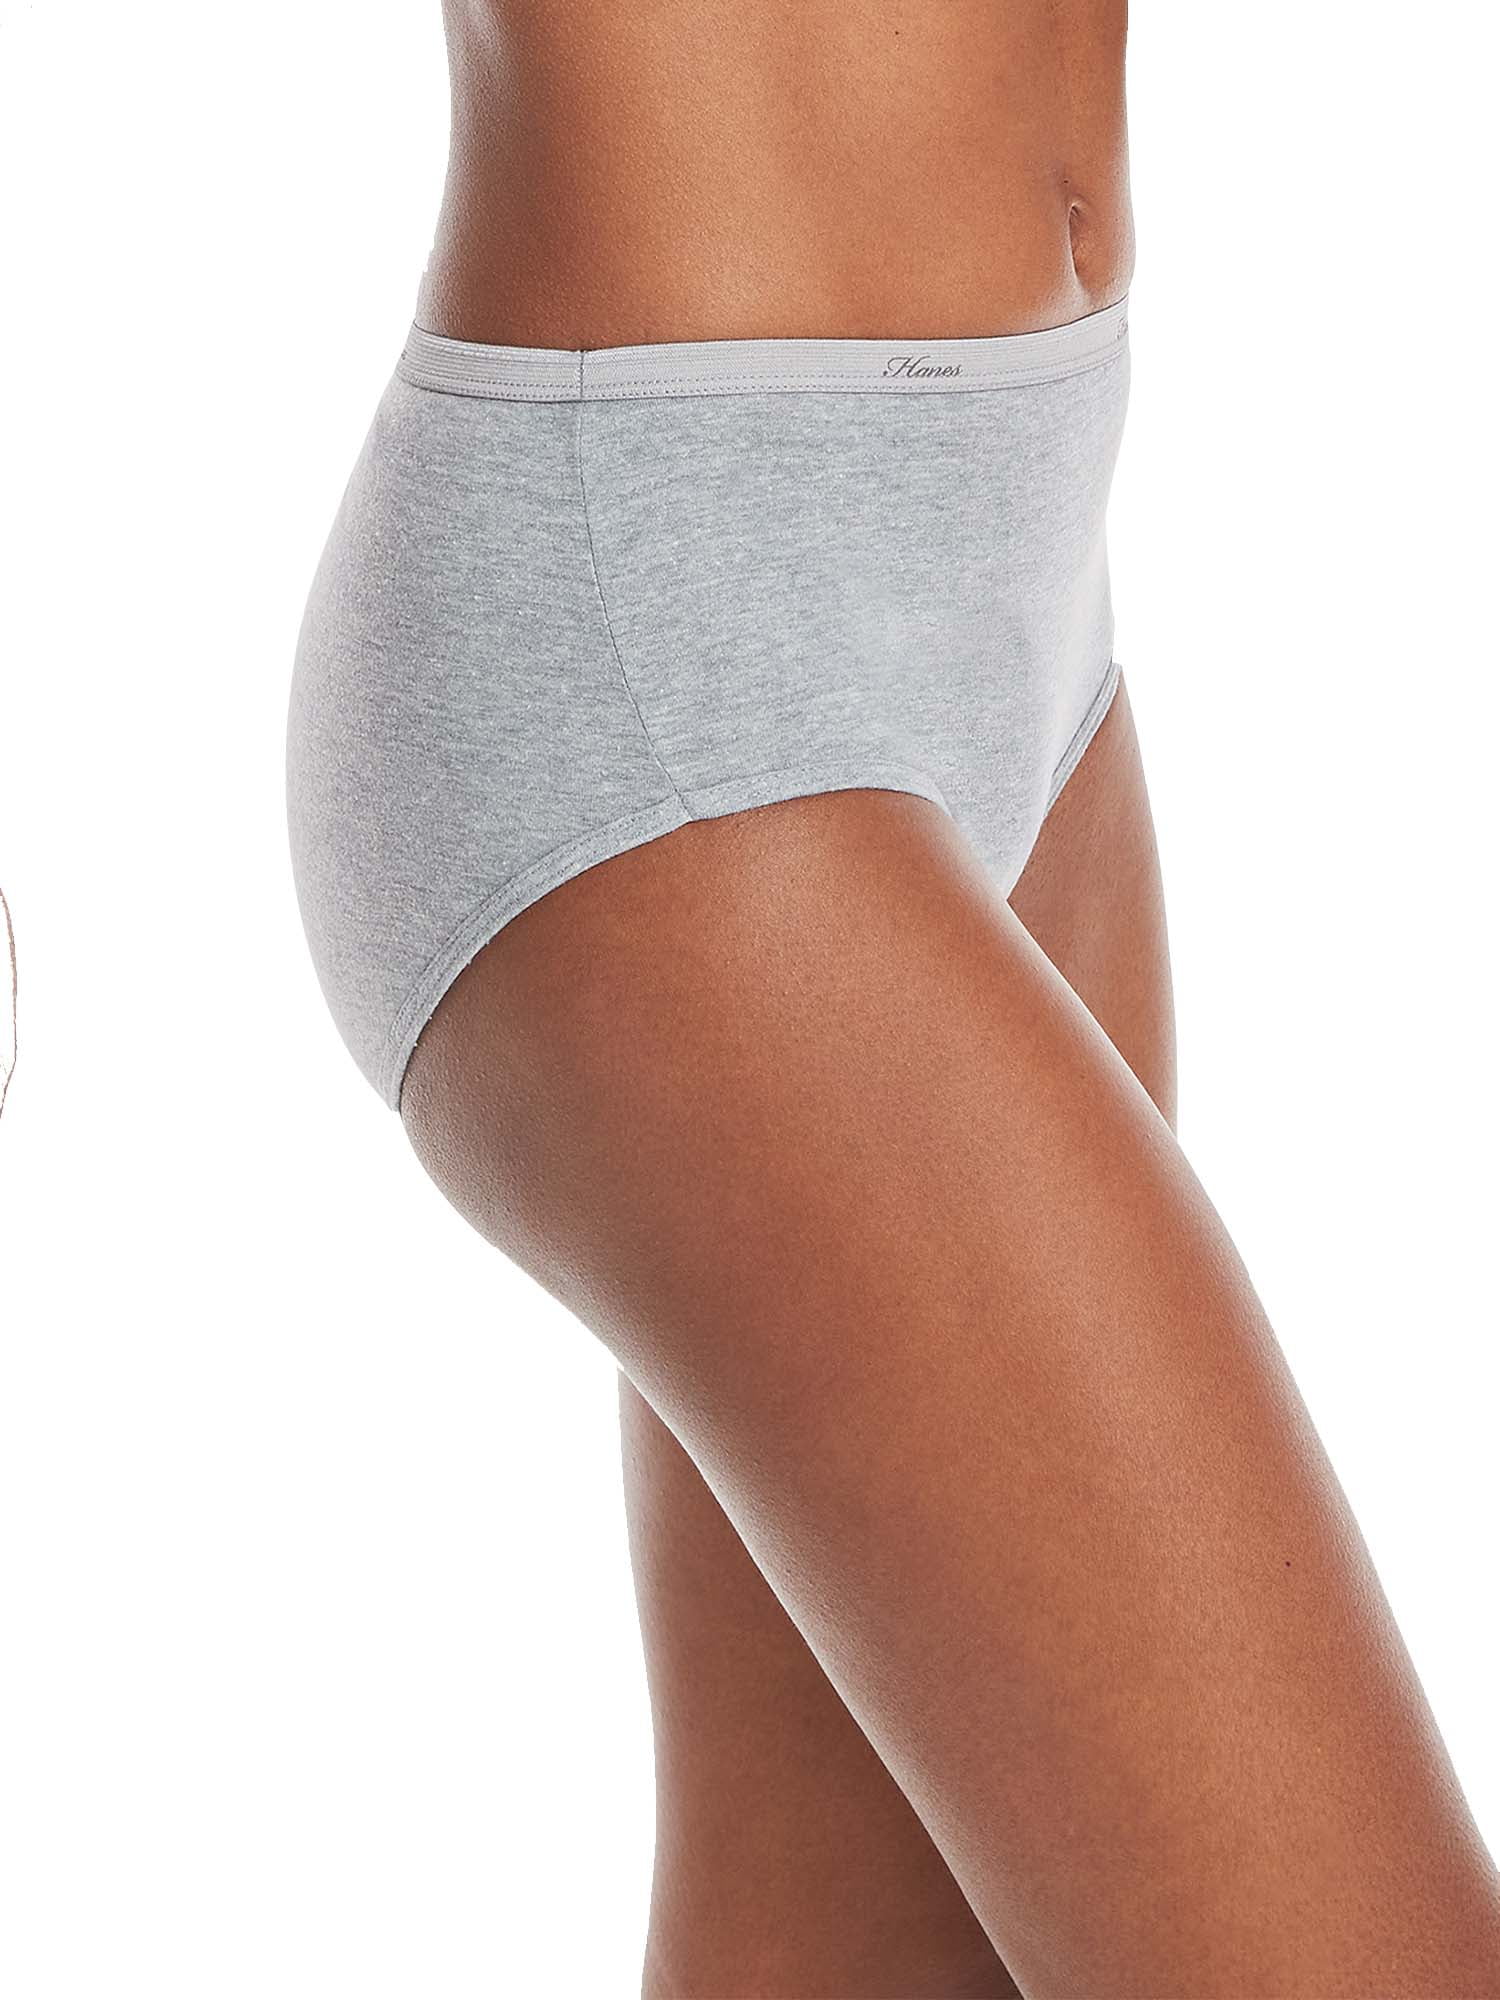 Hanes Women's Panties 6-Pack No Ride Up Cotton Brief Cut Underwear Cool  Comfort